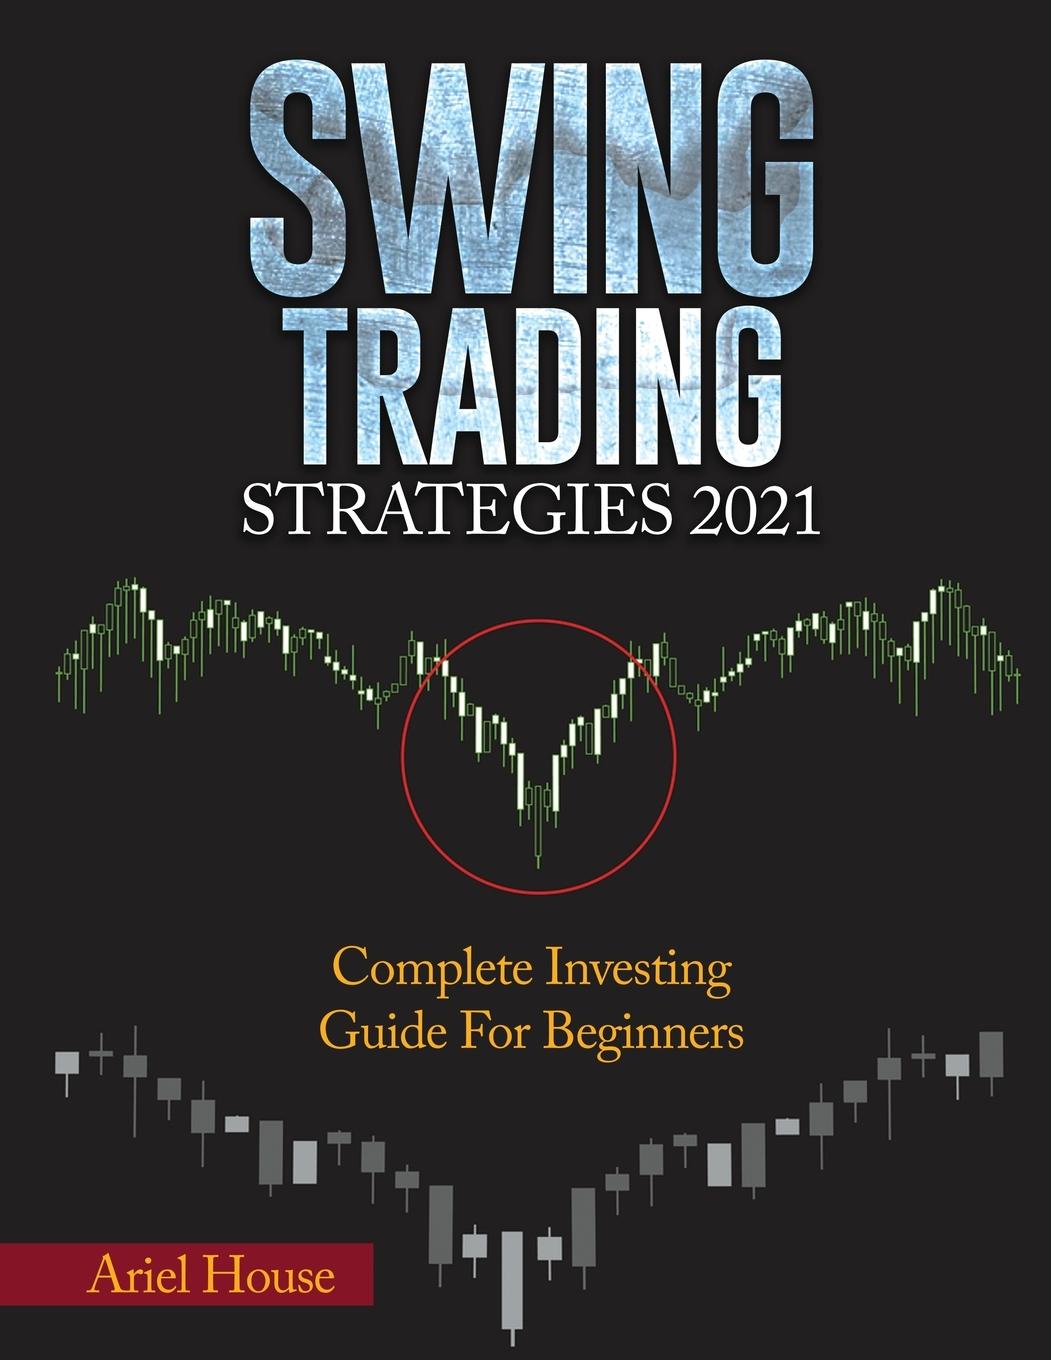 Carte Swing Trading Strategies 2021 